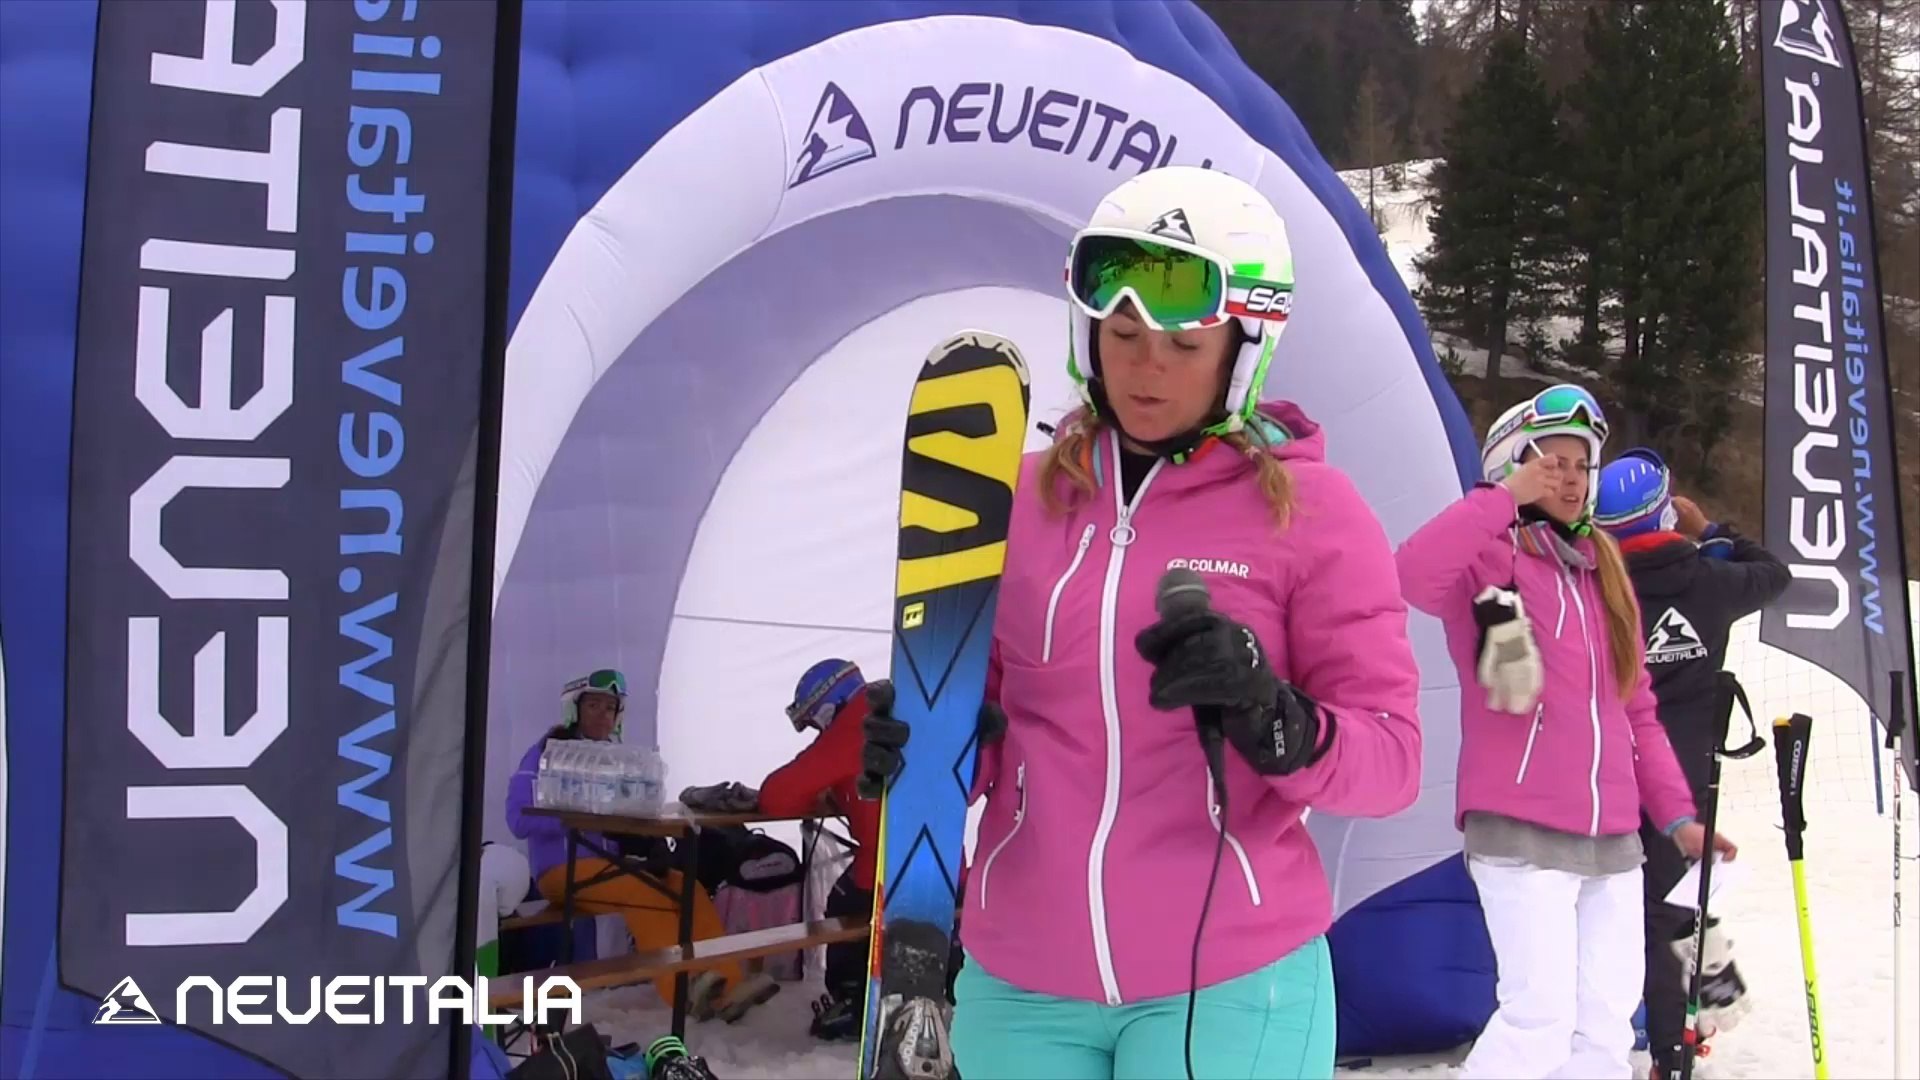 Salomon X-Race SL 165 - Ski-Test Neveitalia 2014/2015 - Video Dailymotion